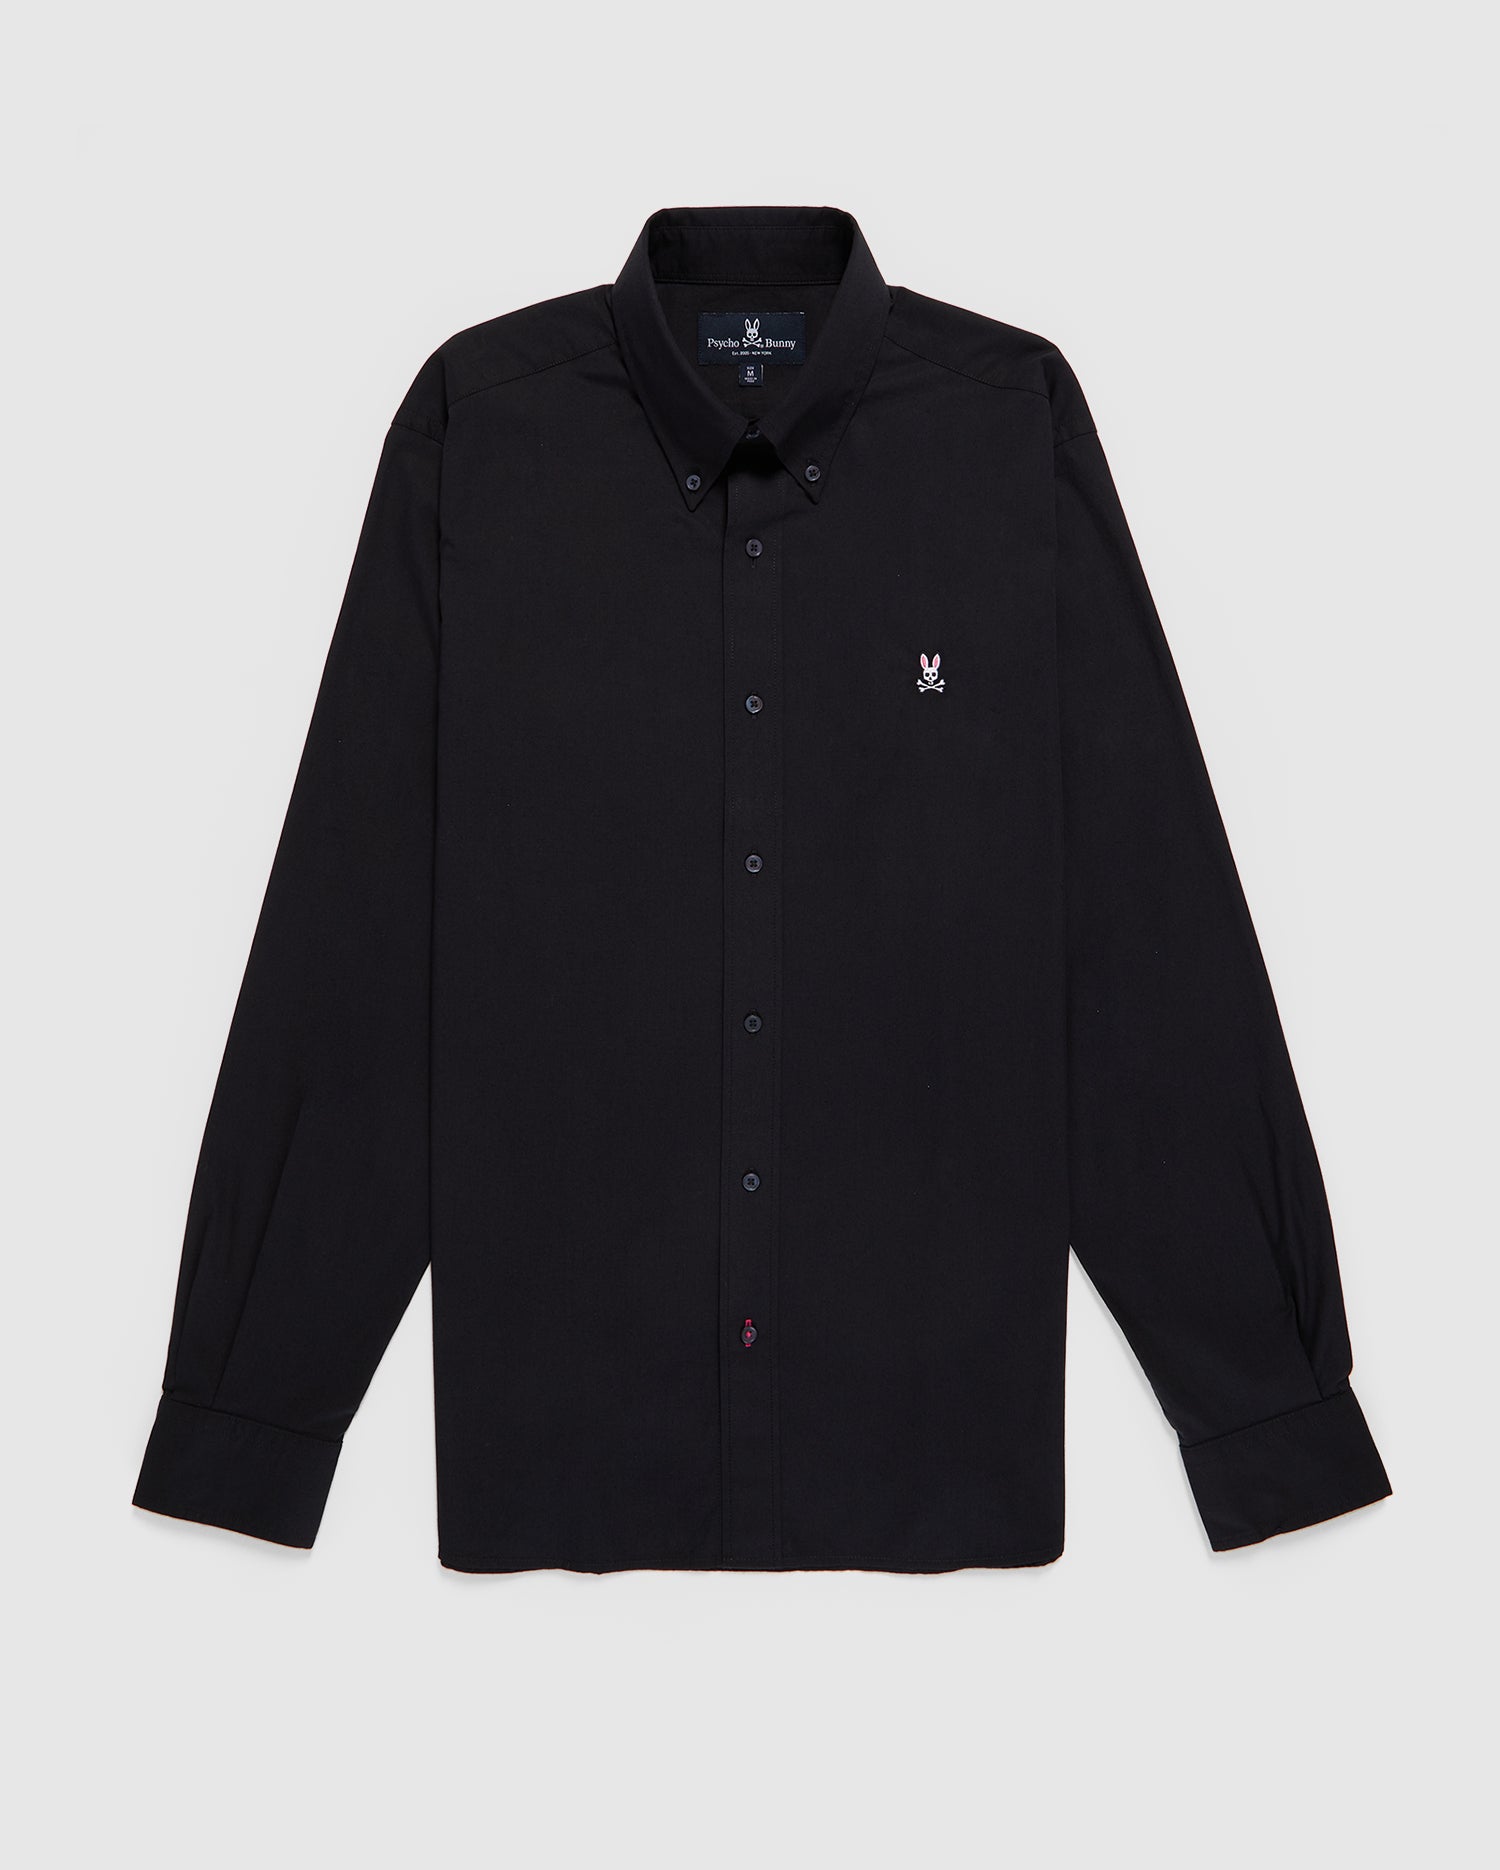 Shop the Classic Men's Poplin Black Long Sleeve Shirt | Psycho Bunny